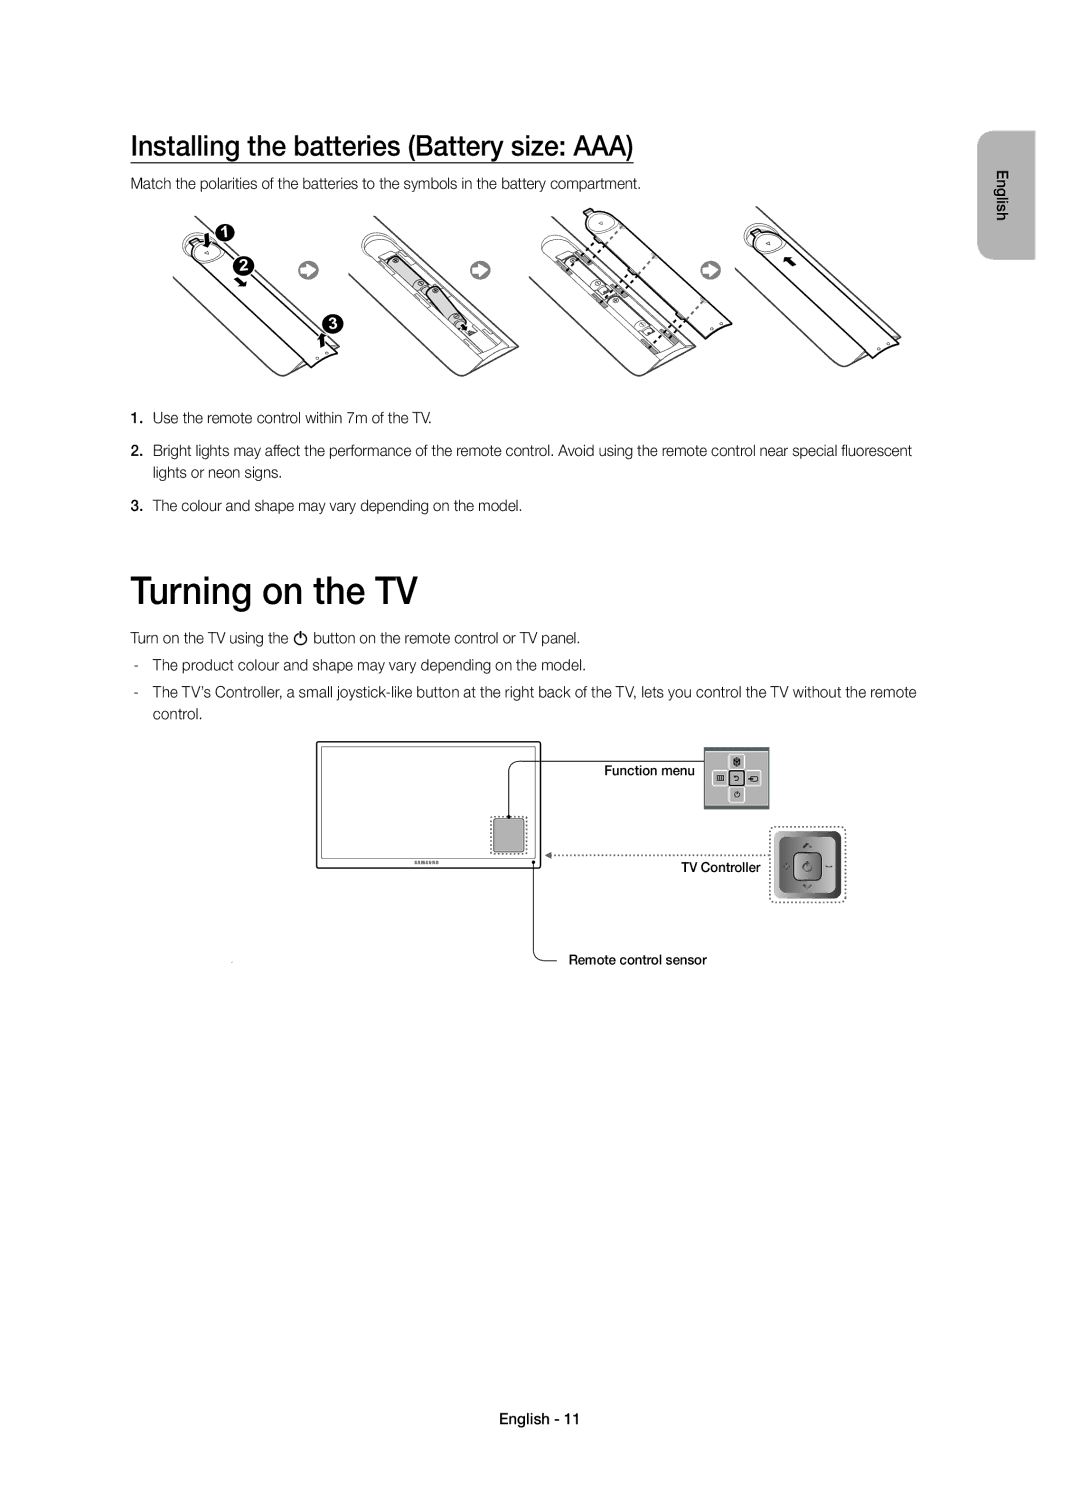 Samsung UE55HU7100SXXC, UE55HU7100SXZG, UE65HU7100SXZG manual Turning on the TV, Installing the batteries Battery size AAA 